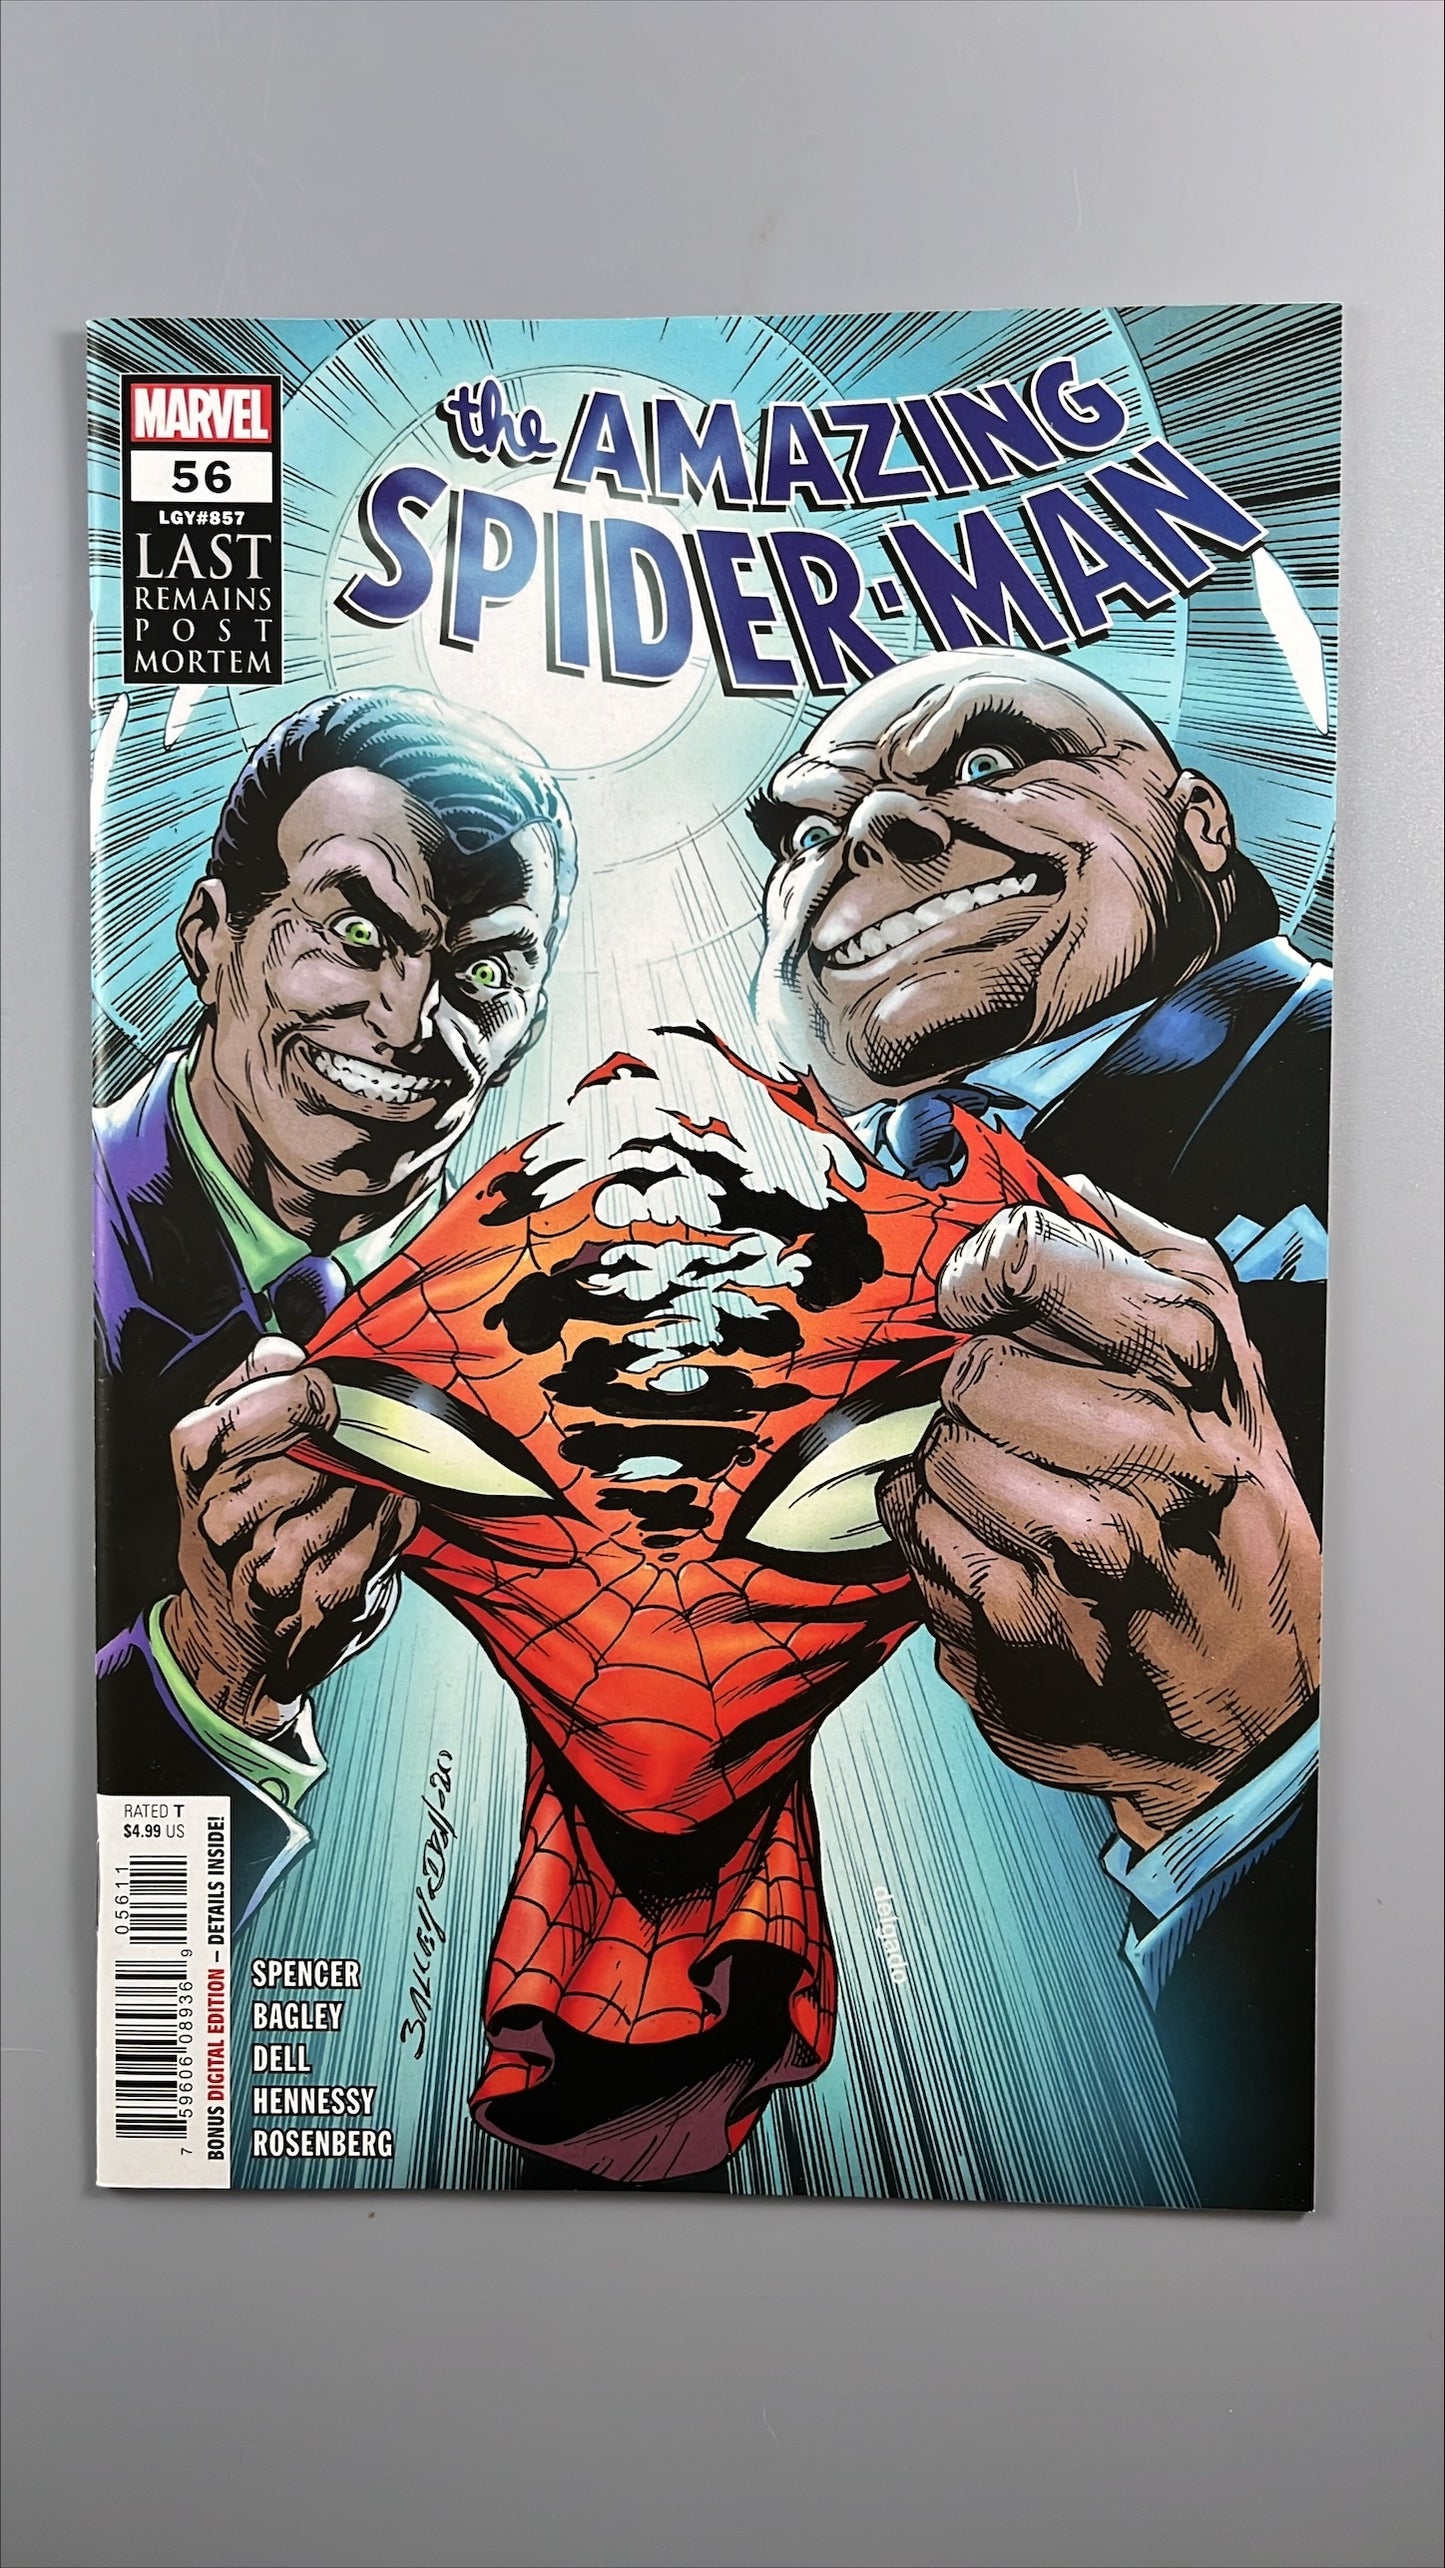 Amazing Spider-Man #056 (LGY #857)